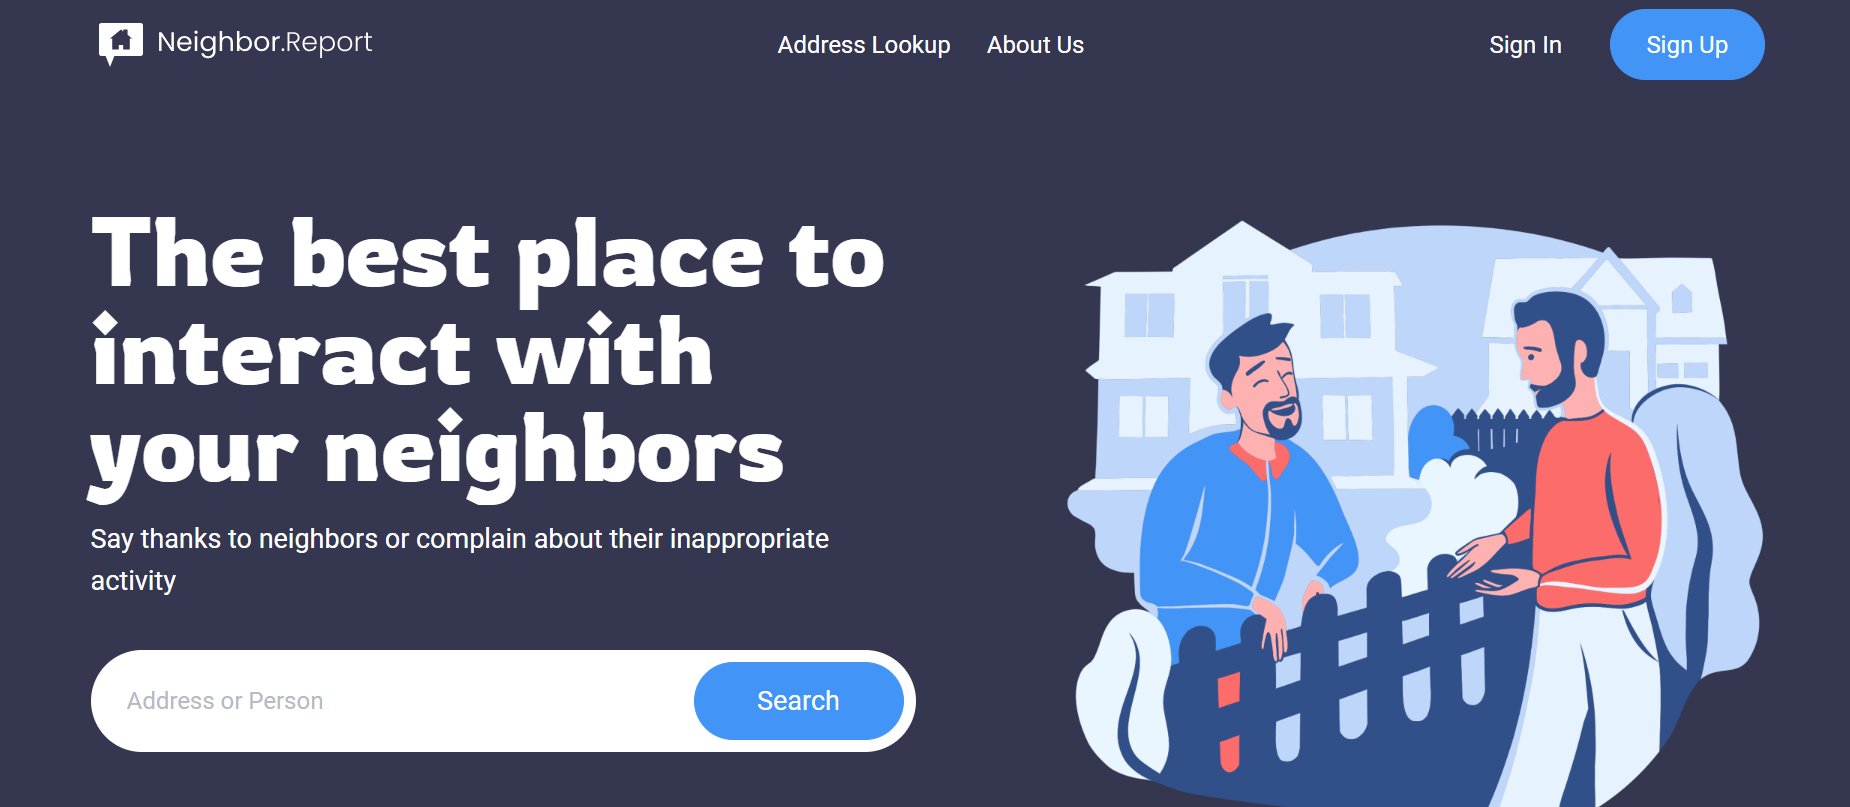 neighbor reports homepage